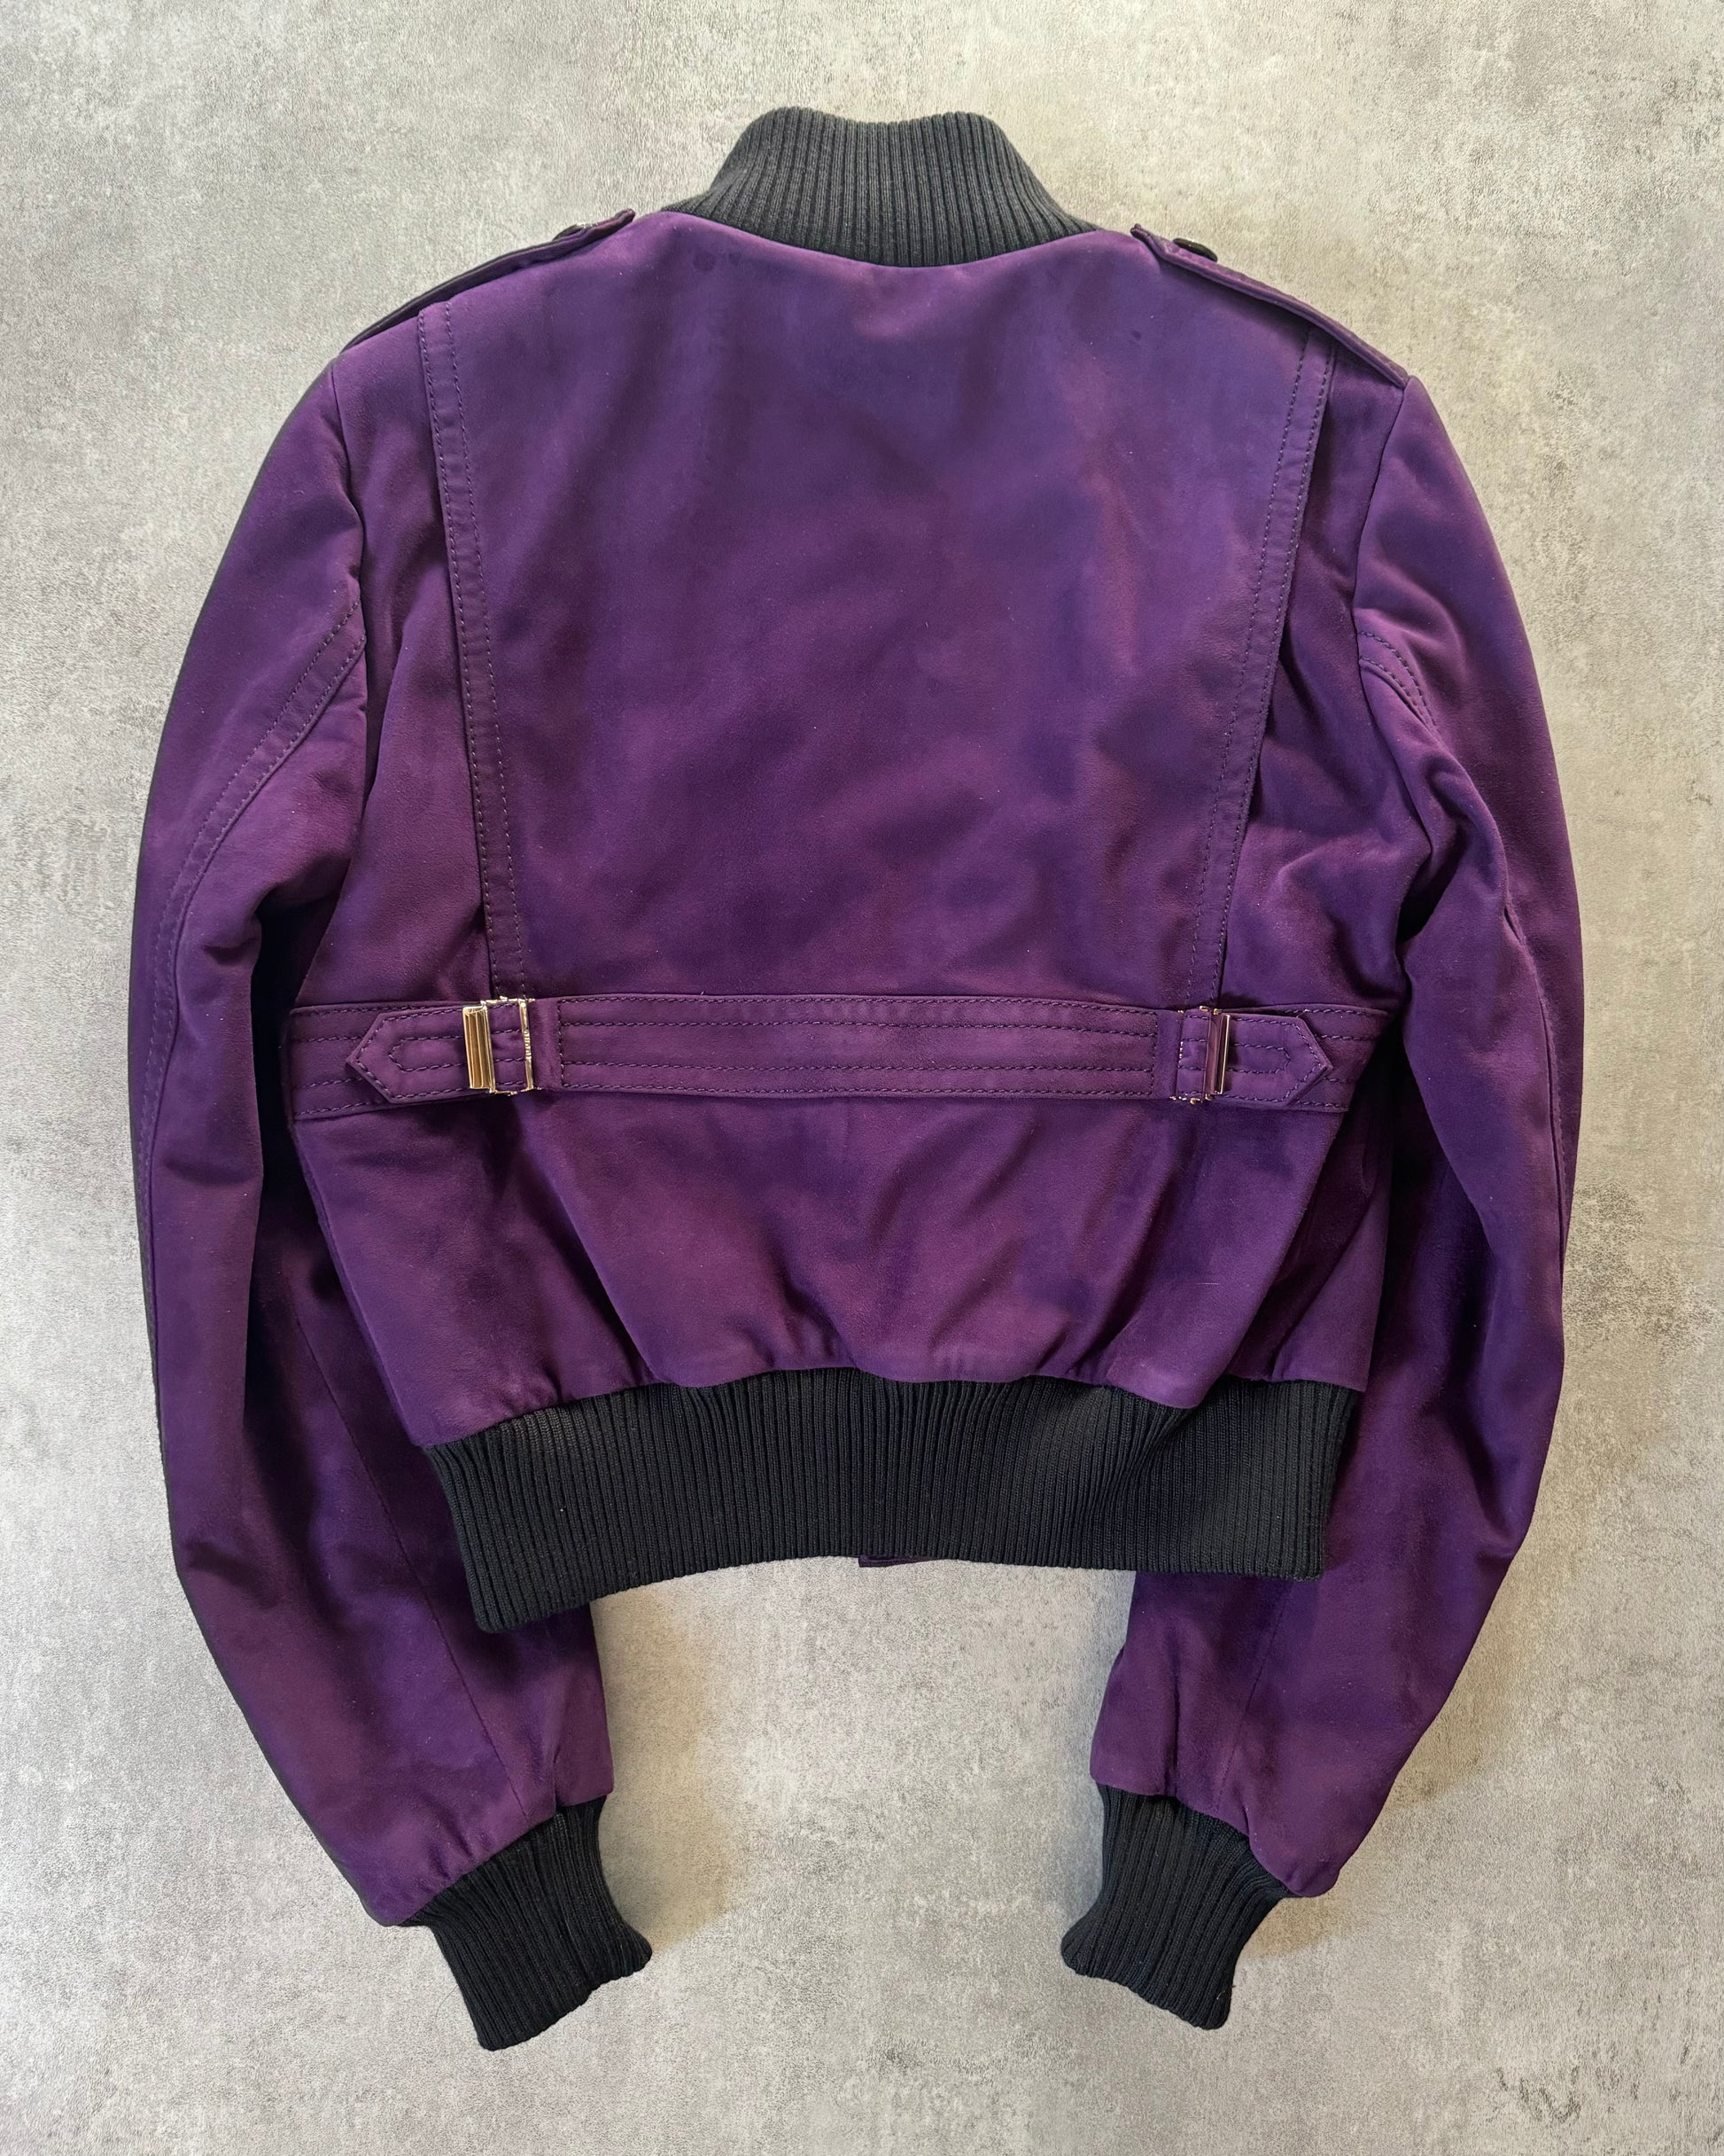 Gucci Purple Madonna Leather Jacket by Frida Giannini (S) - 2